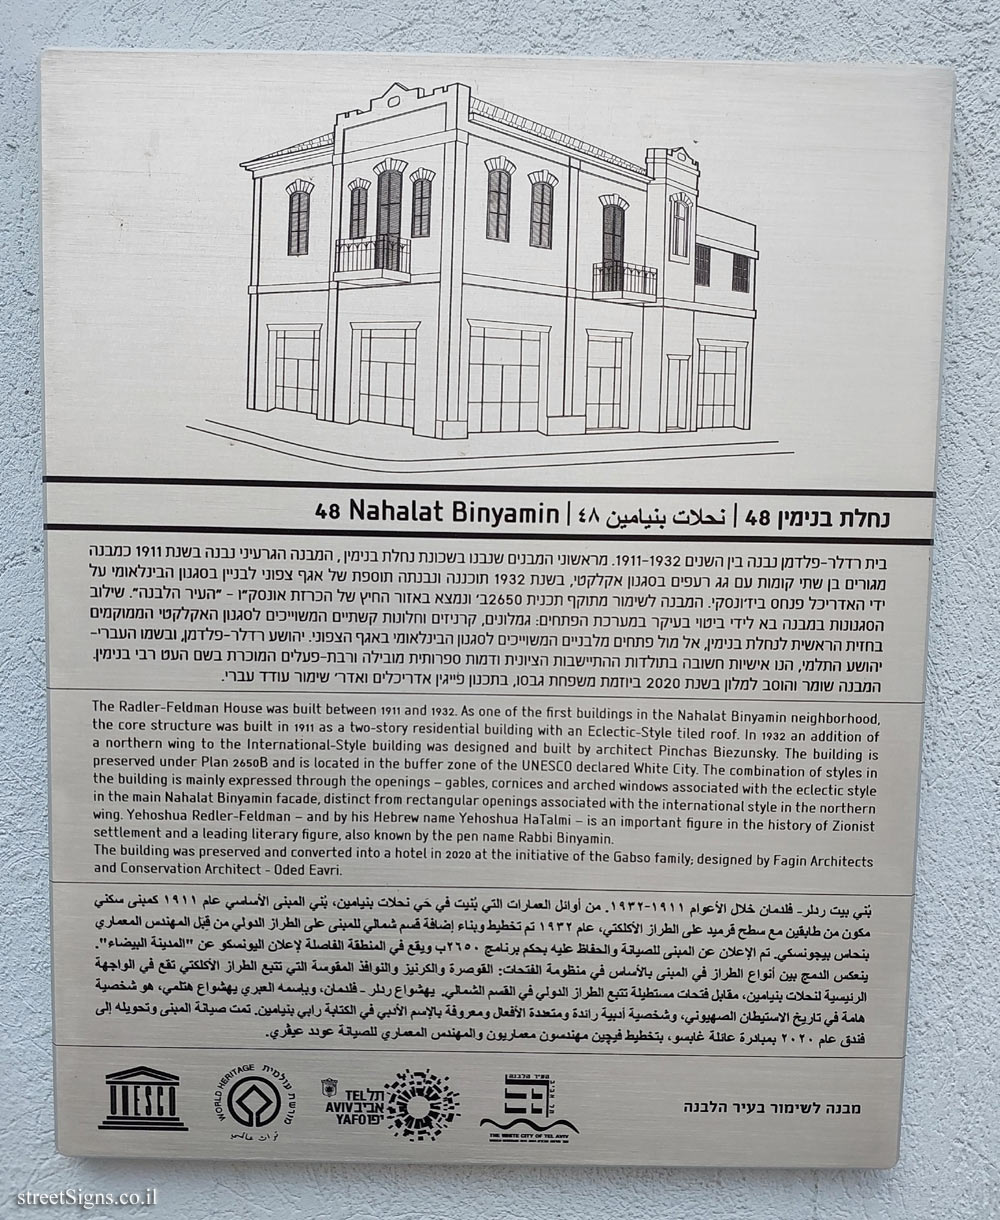 Tel Aviv - buildings for conservation - 48 Nahalat Binyamin